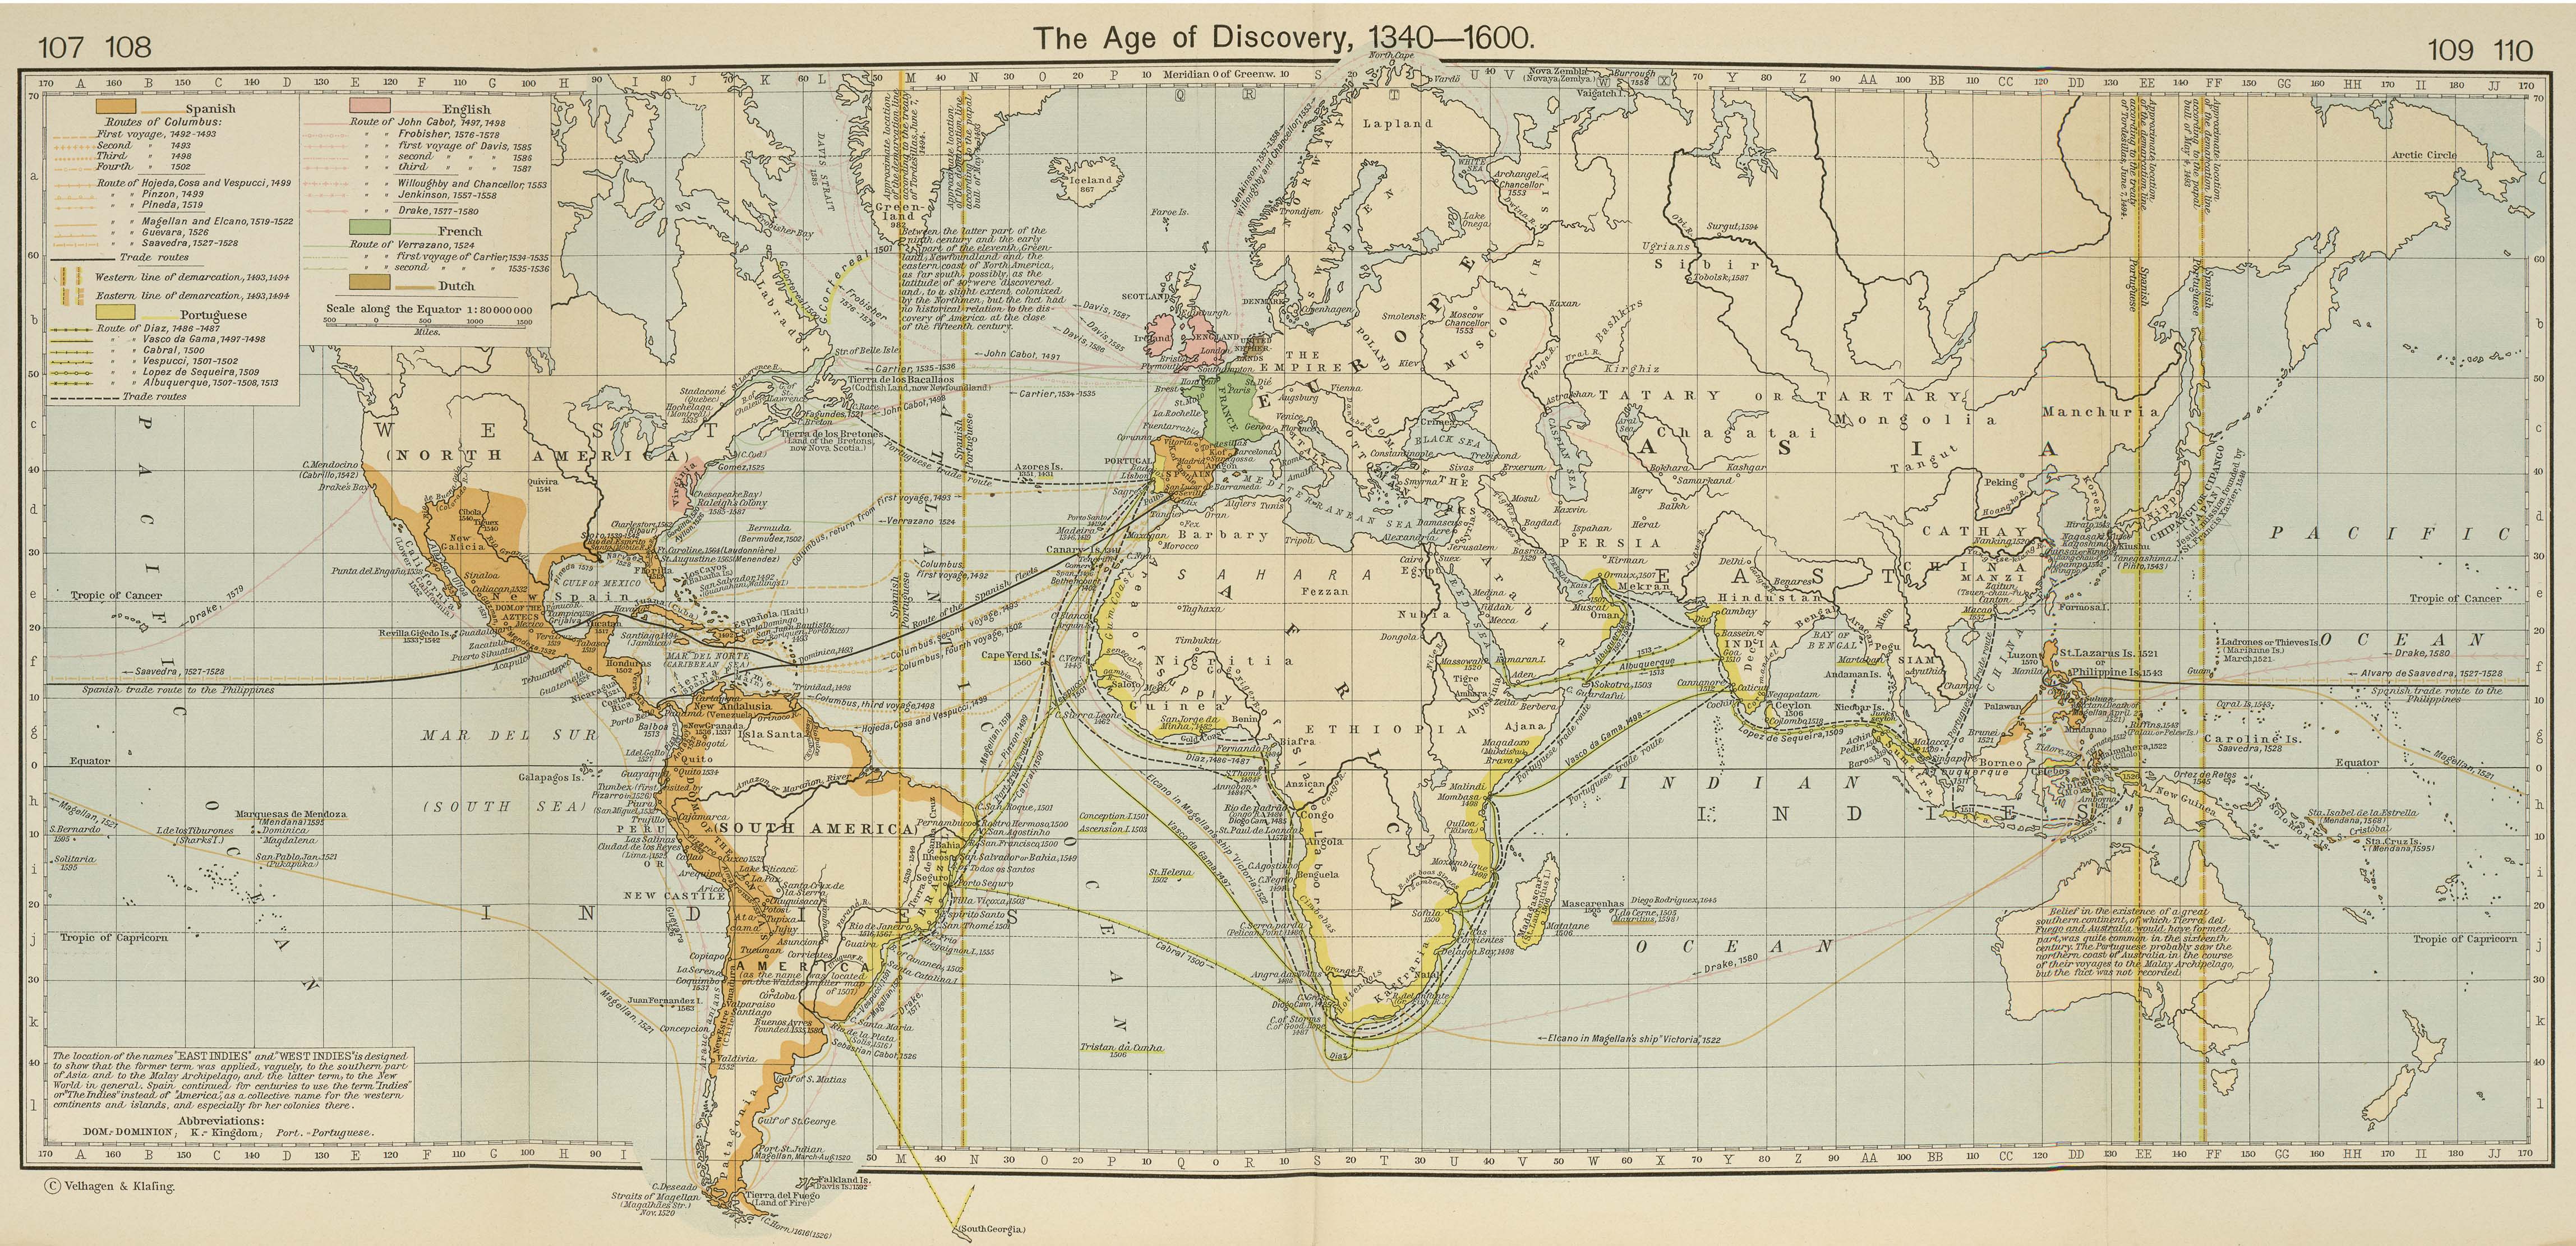 Shepherd C 107 110 On Old Maps Of The World Maps